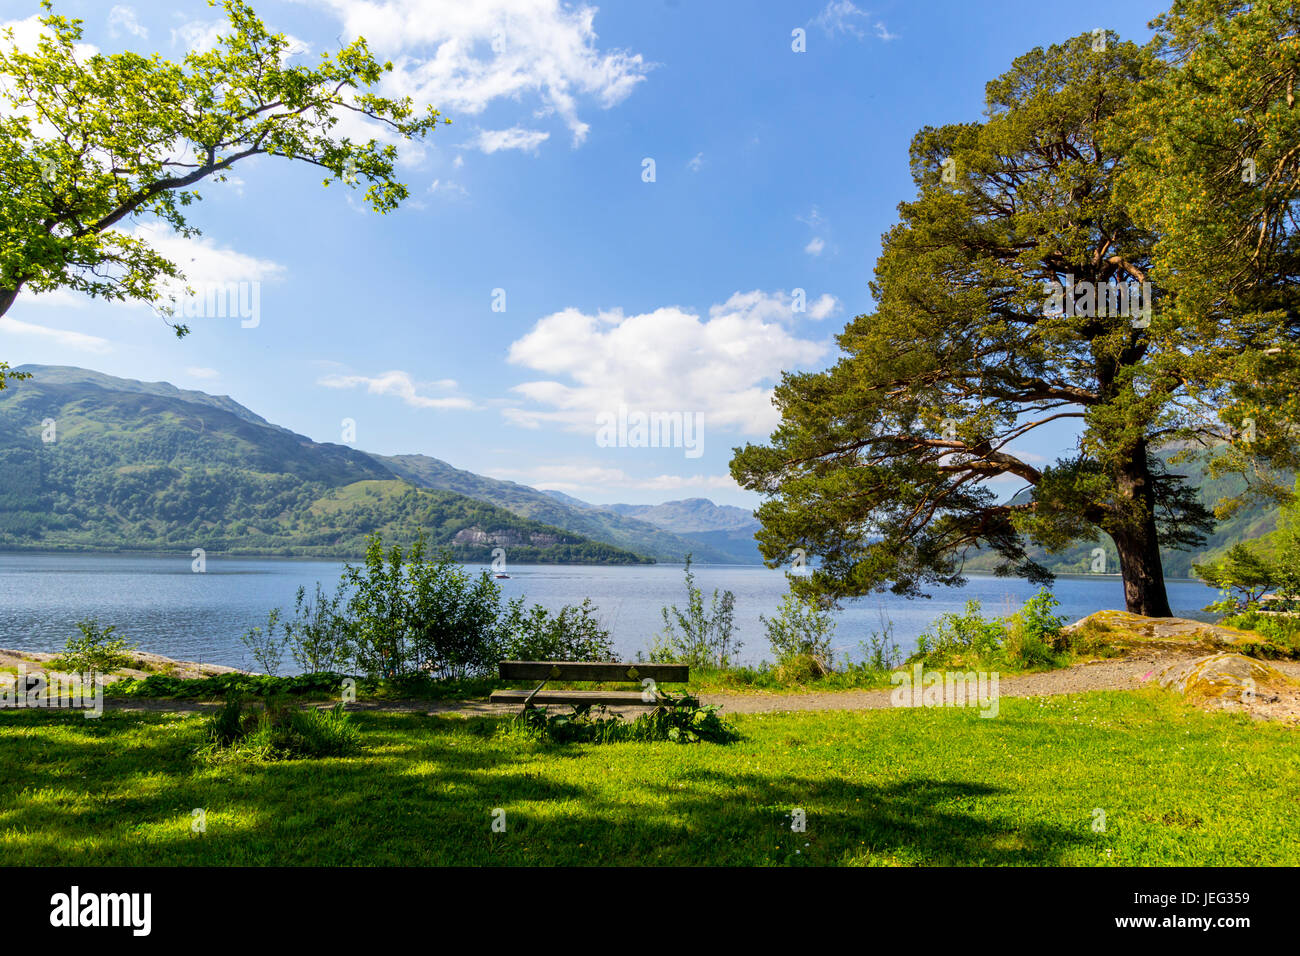 Loch Lomond at rowardennan, Summer in Scotland, UK Stock Photo